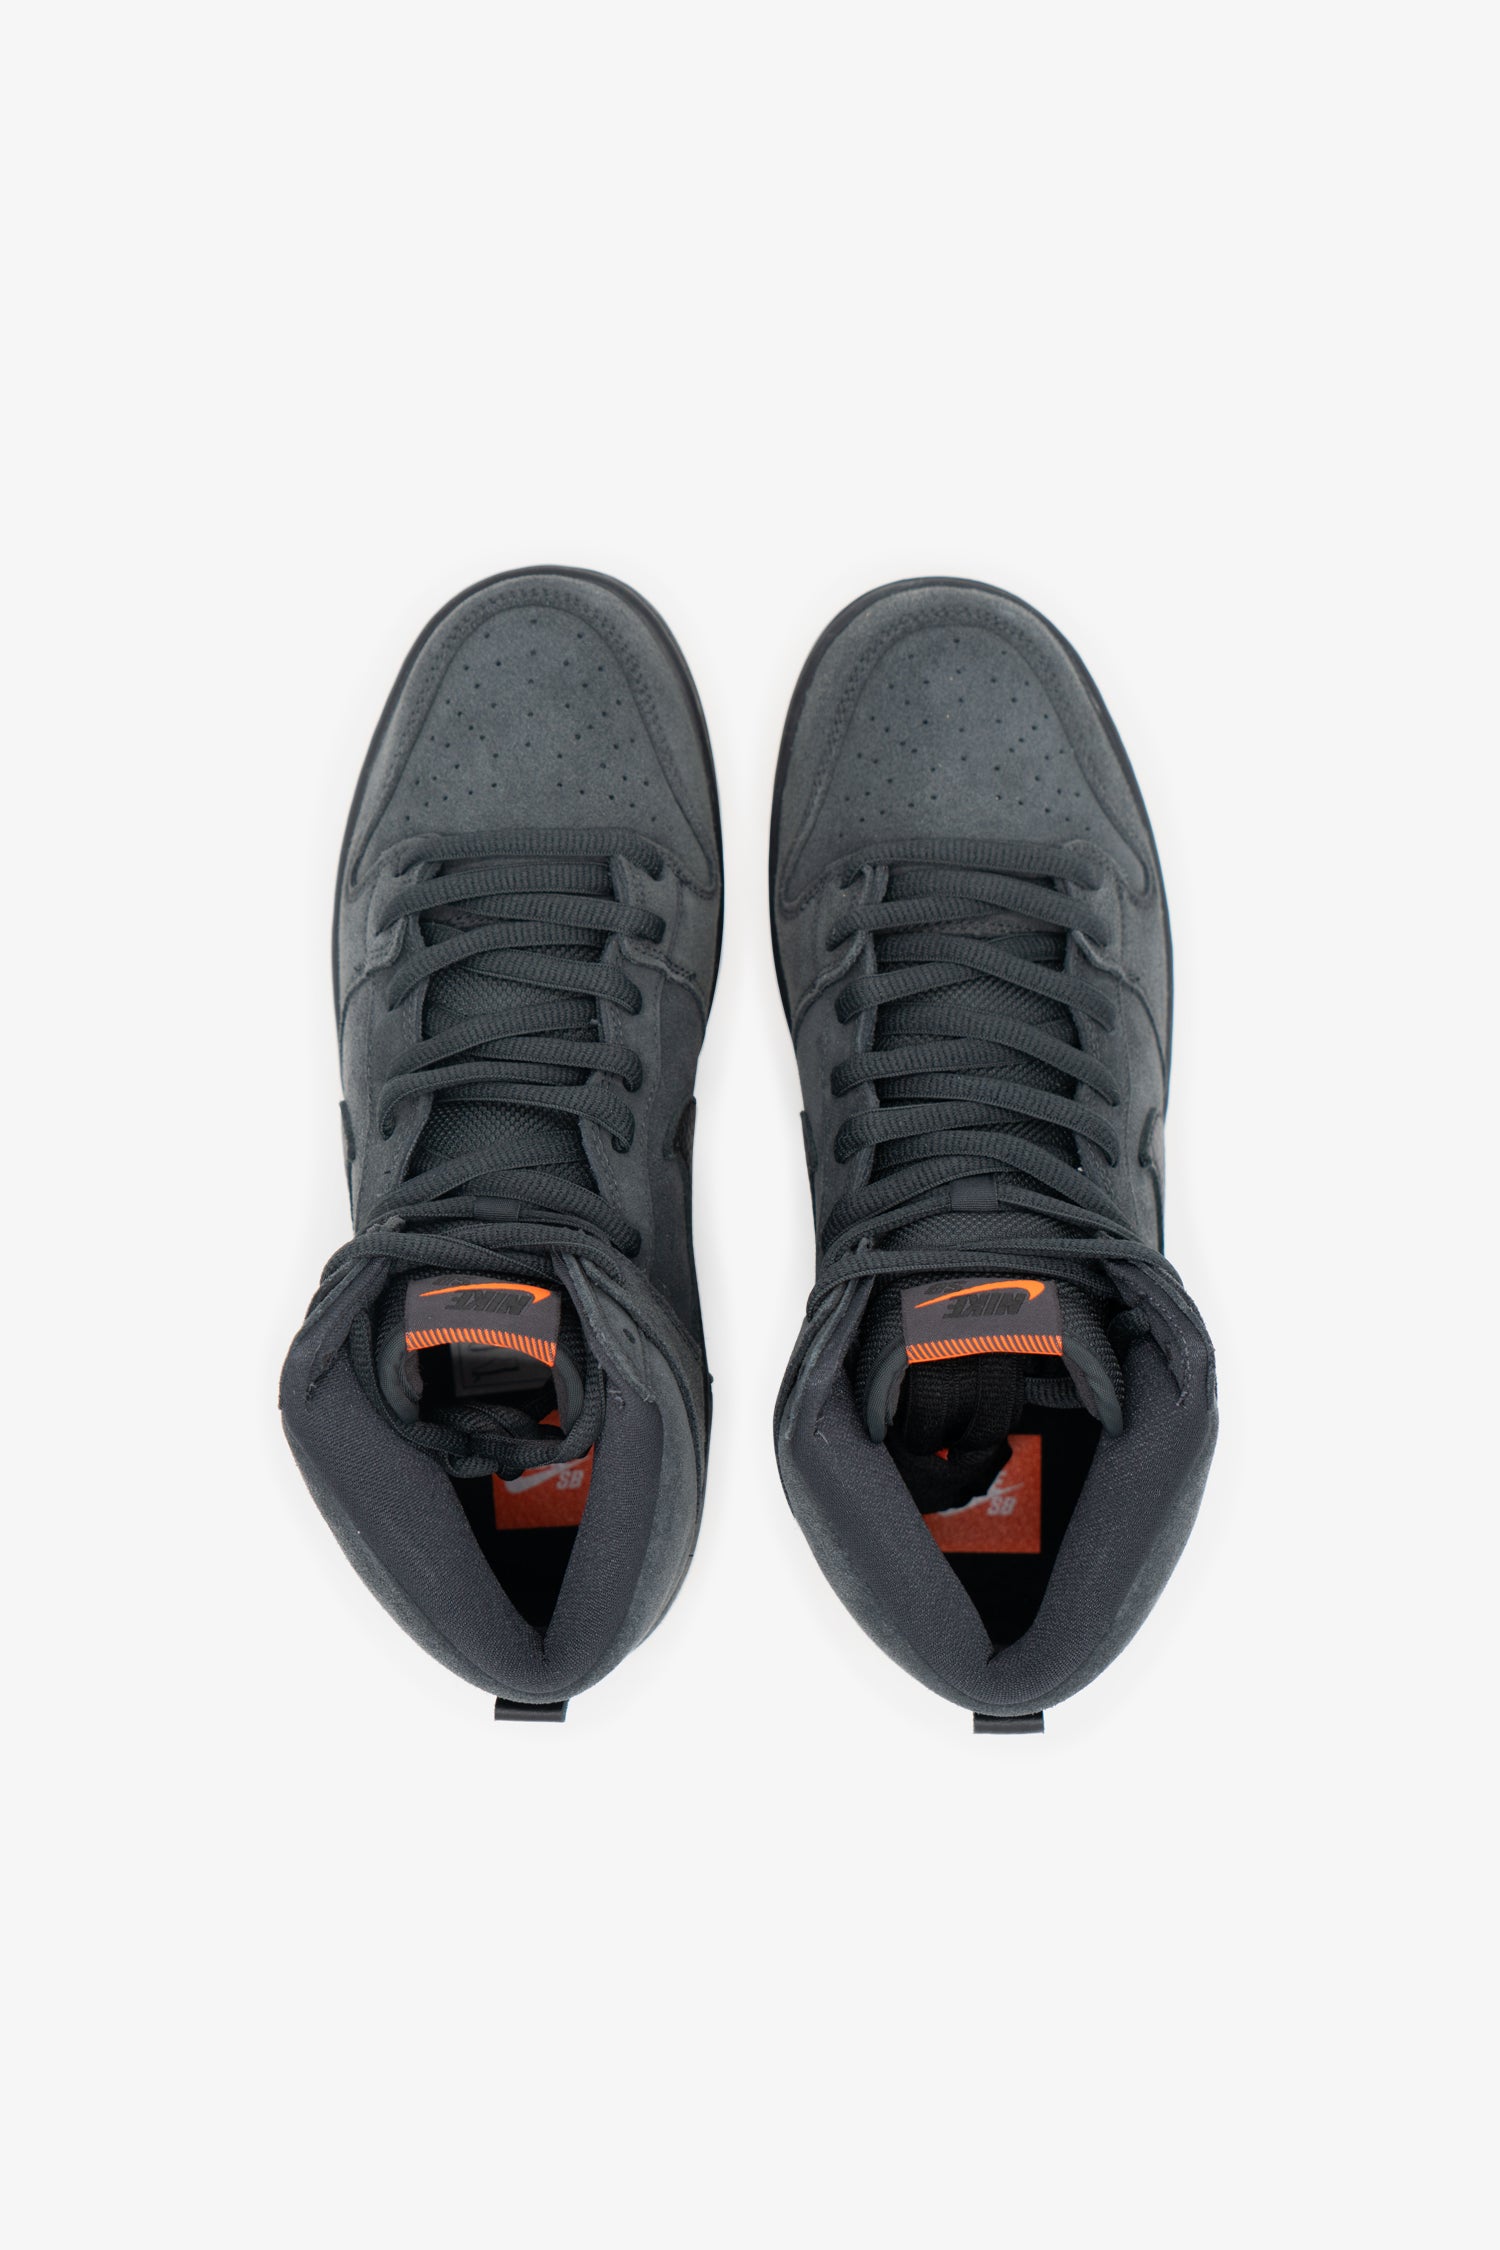 Selectshop FRAME - NIKE SB Nike SB Dunk High Pro "Dark Smoke" Footwear Dubai